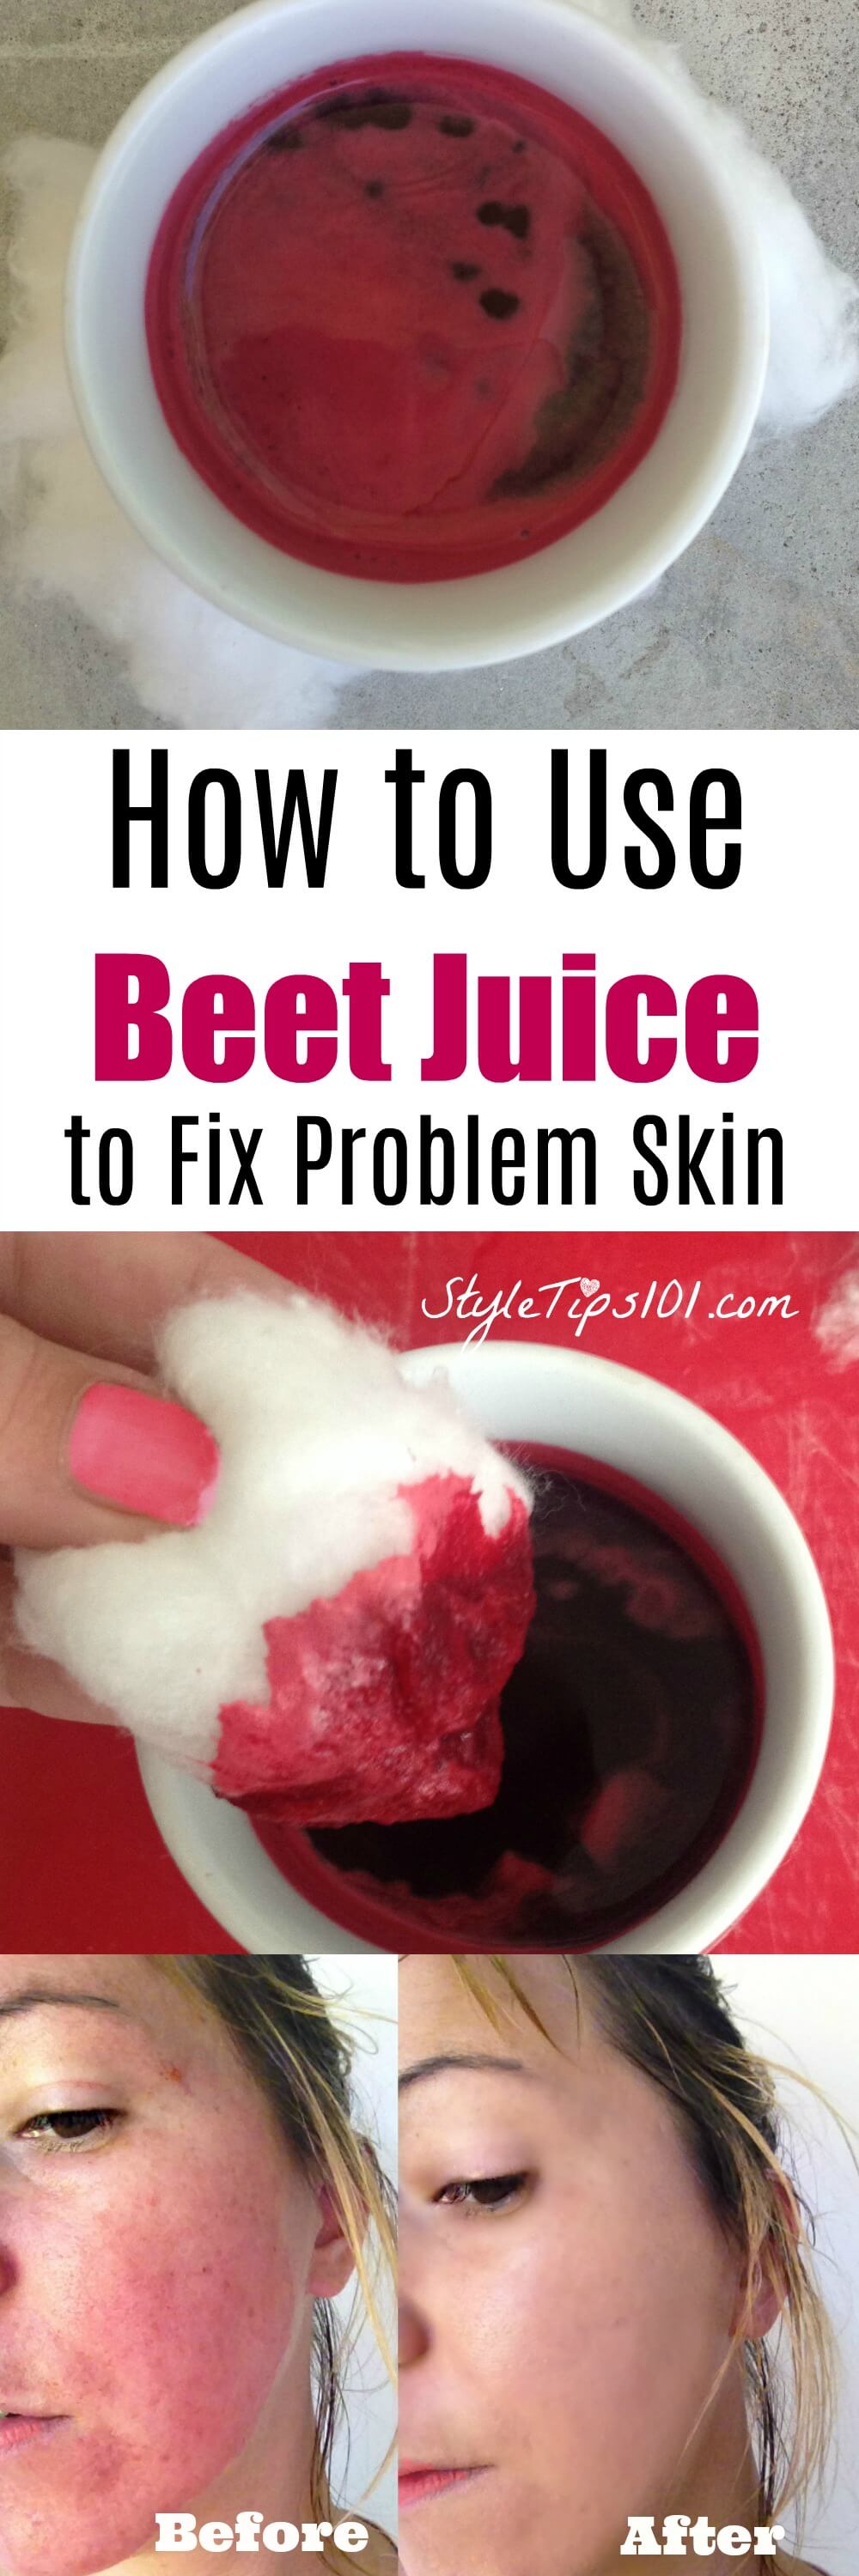 beet juice for skin